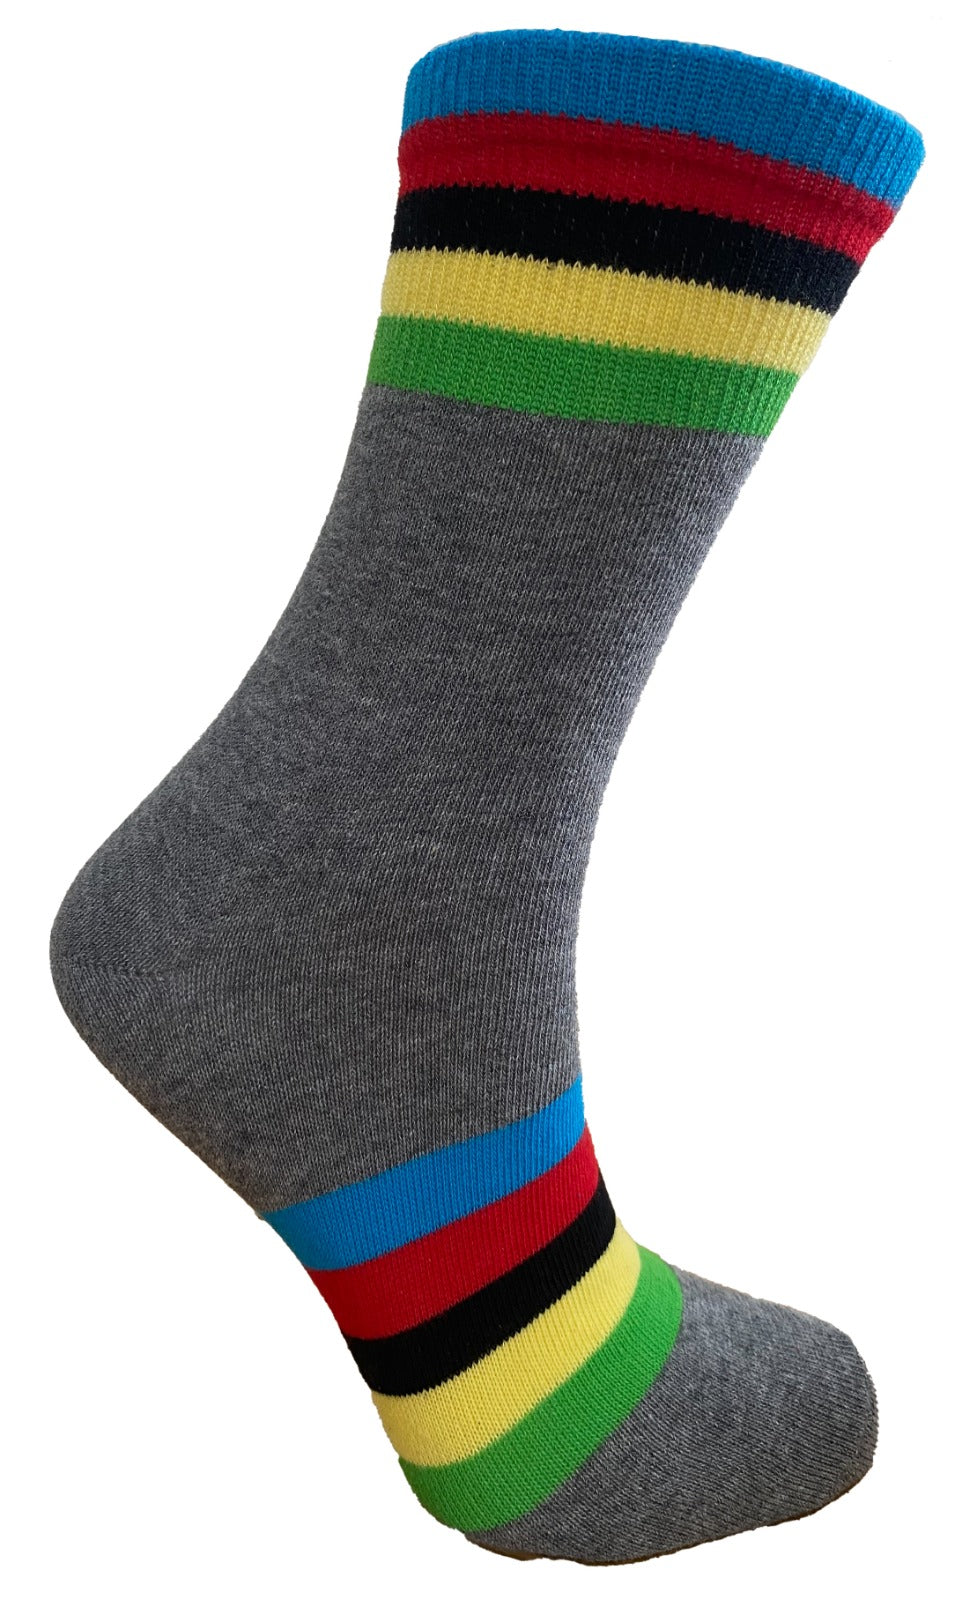 UCI Grey Socks